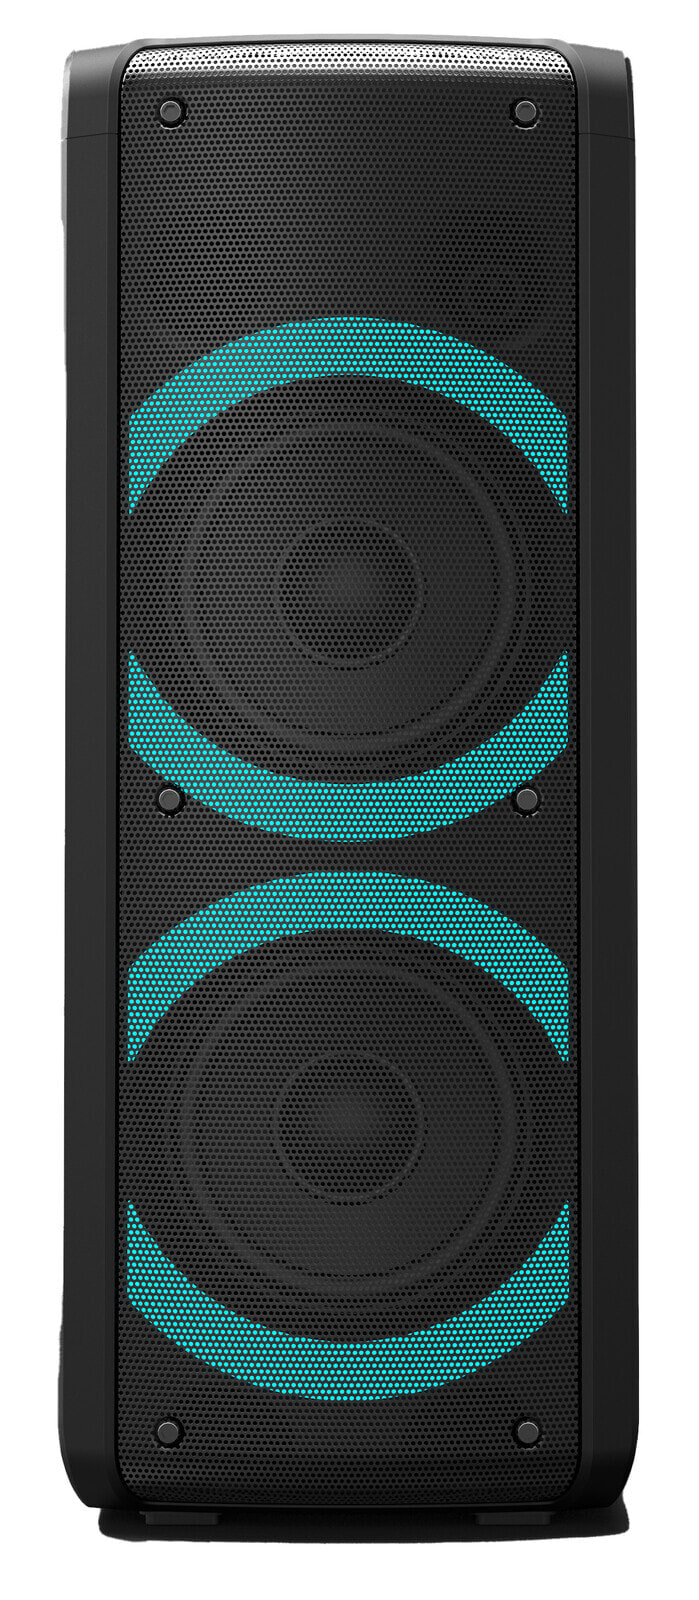 Inter Sales Bluetooth Trolley Speaker Dual 6.5inch party speaker - Speaker